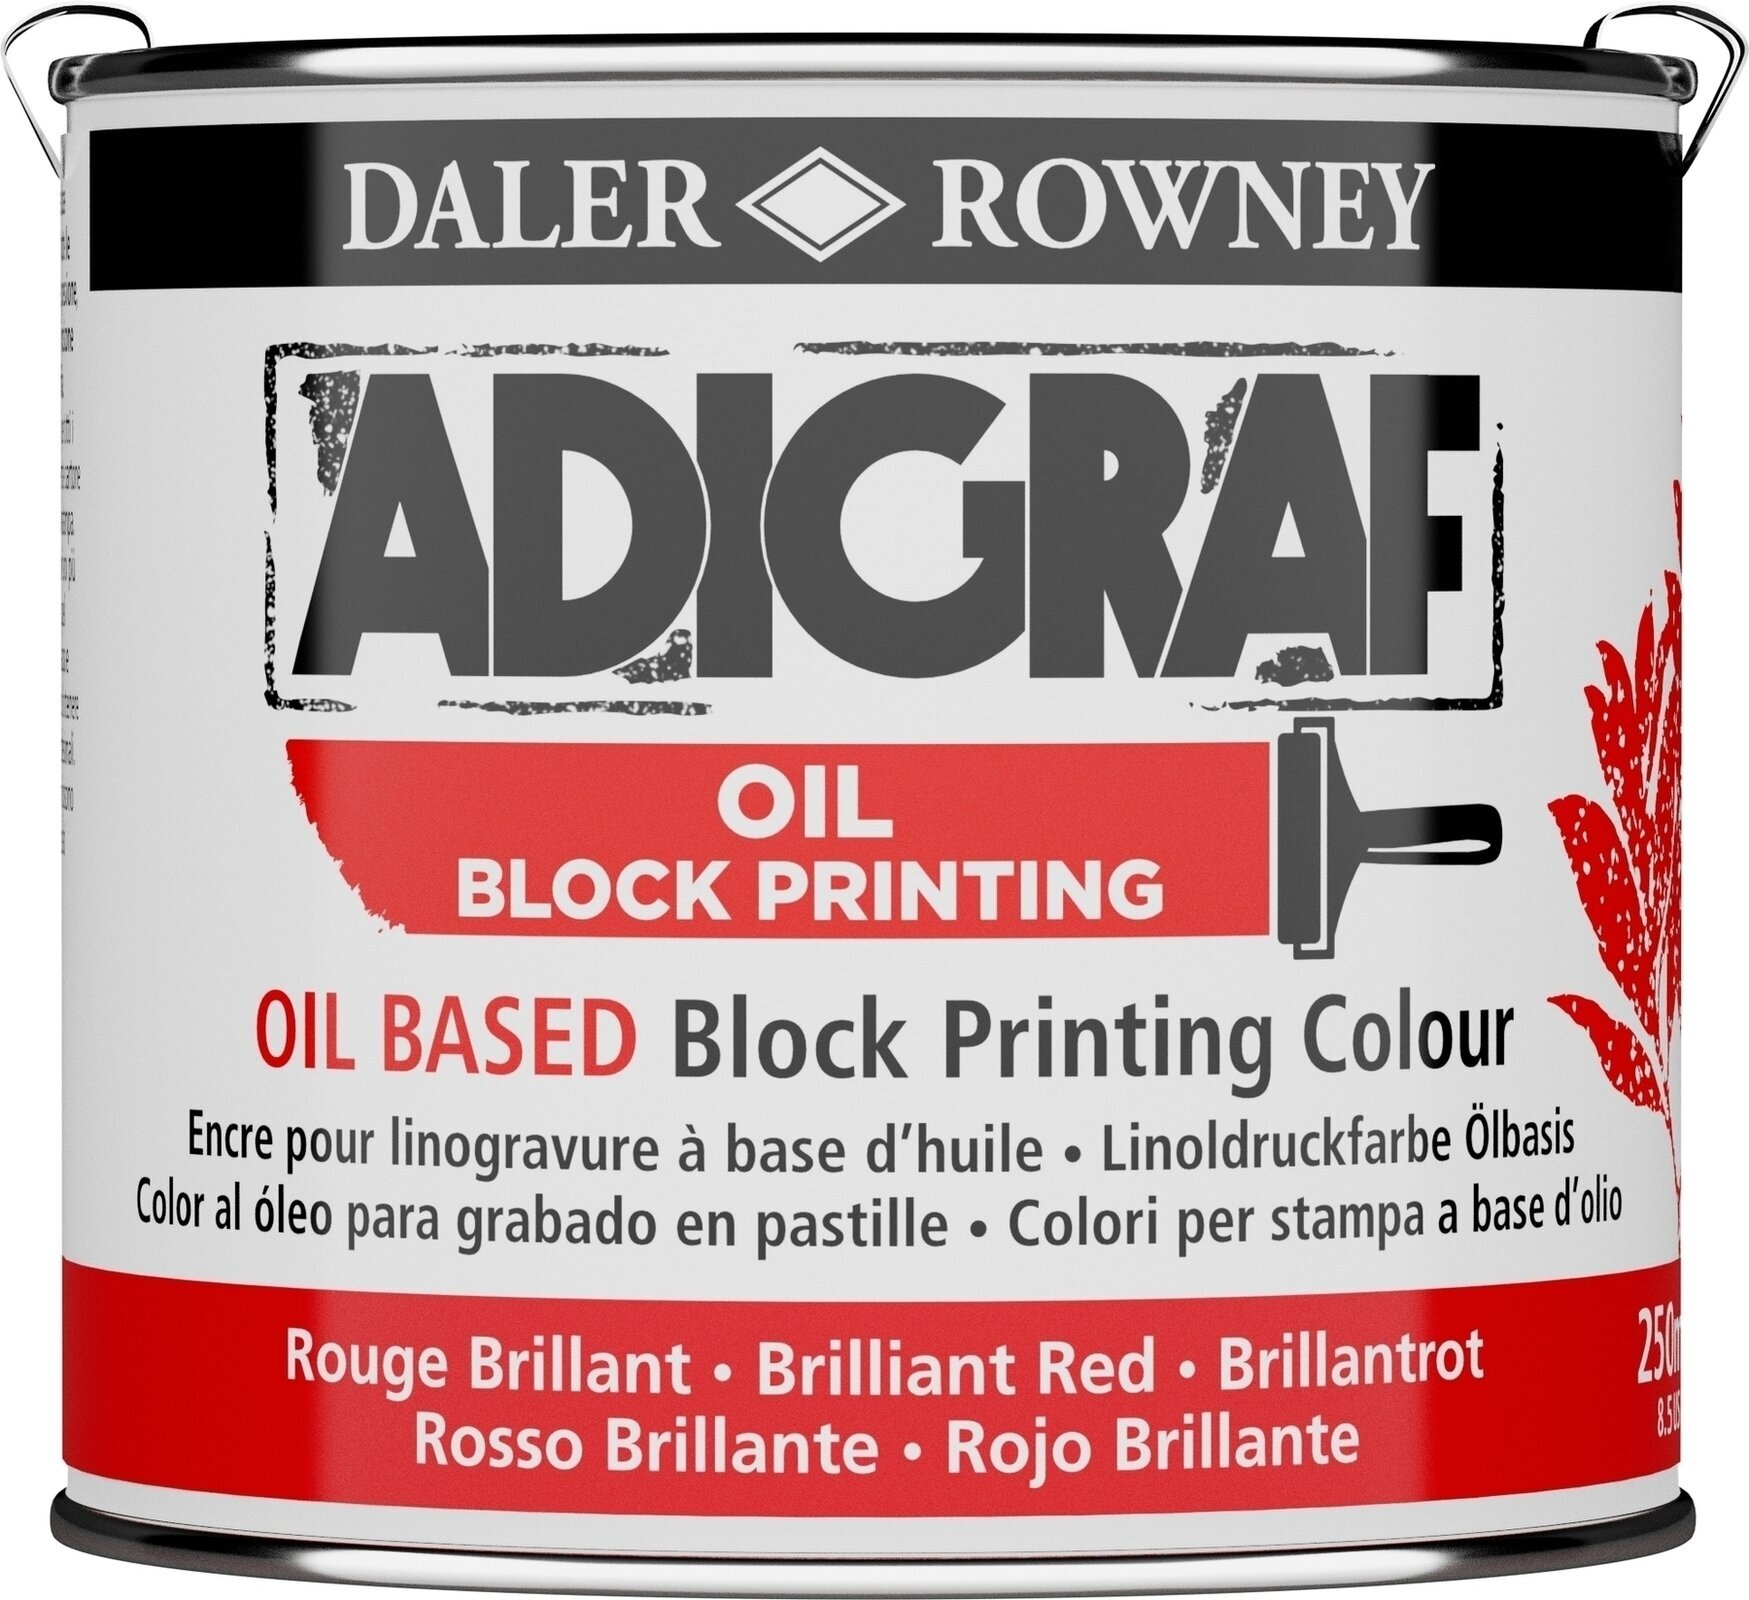 Paint For Linocut Daler Rowney Adigraf Block Printing Oil Paint For Linocut Brilliant Red 250 ml